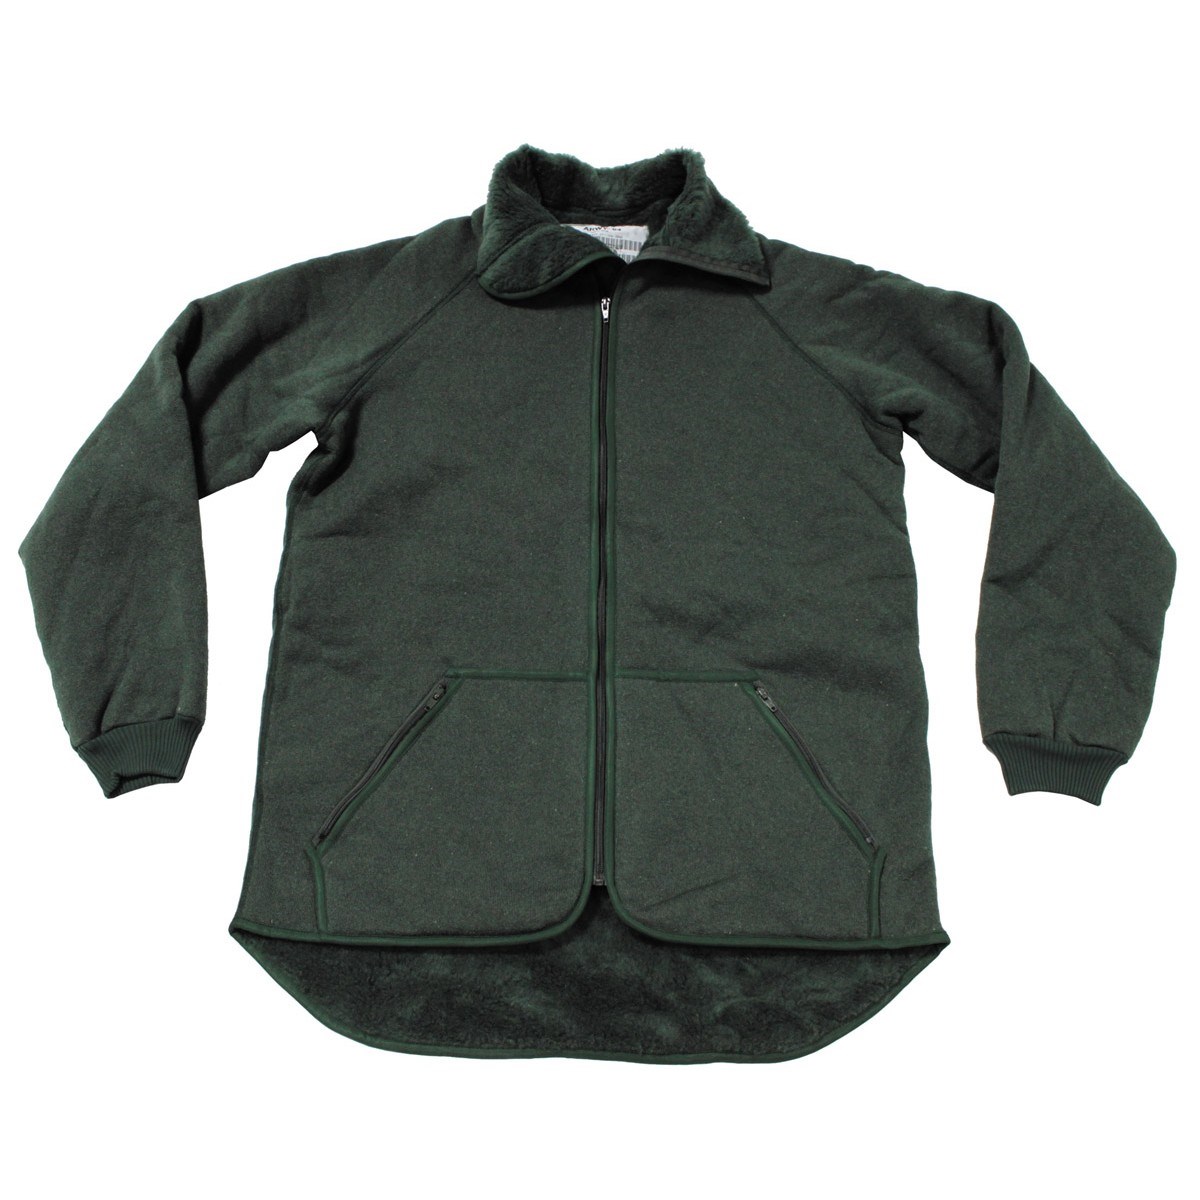 Dutch fleece jacket OLIVE used Dutch Army 91085100 L-11